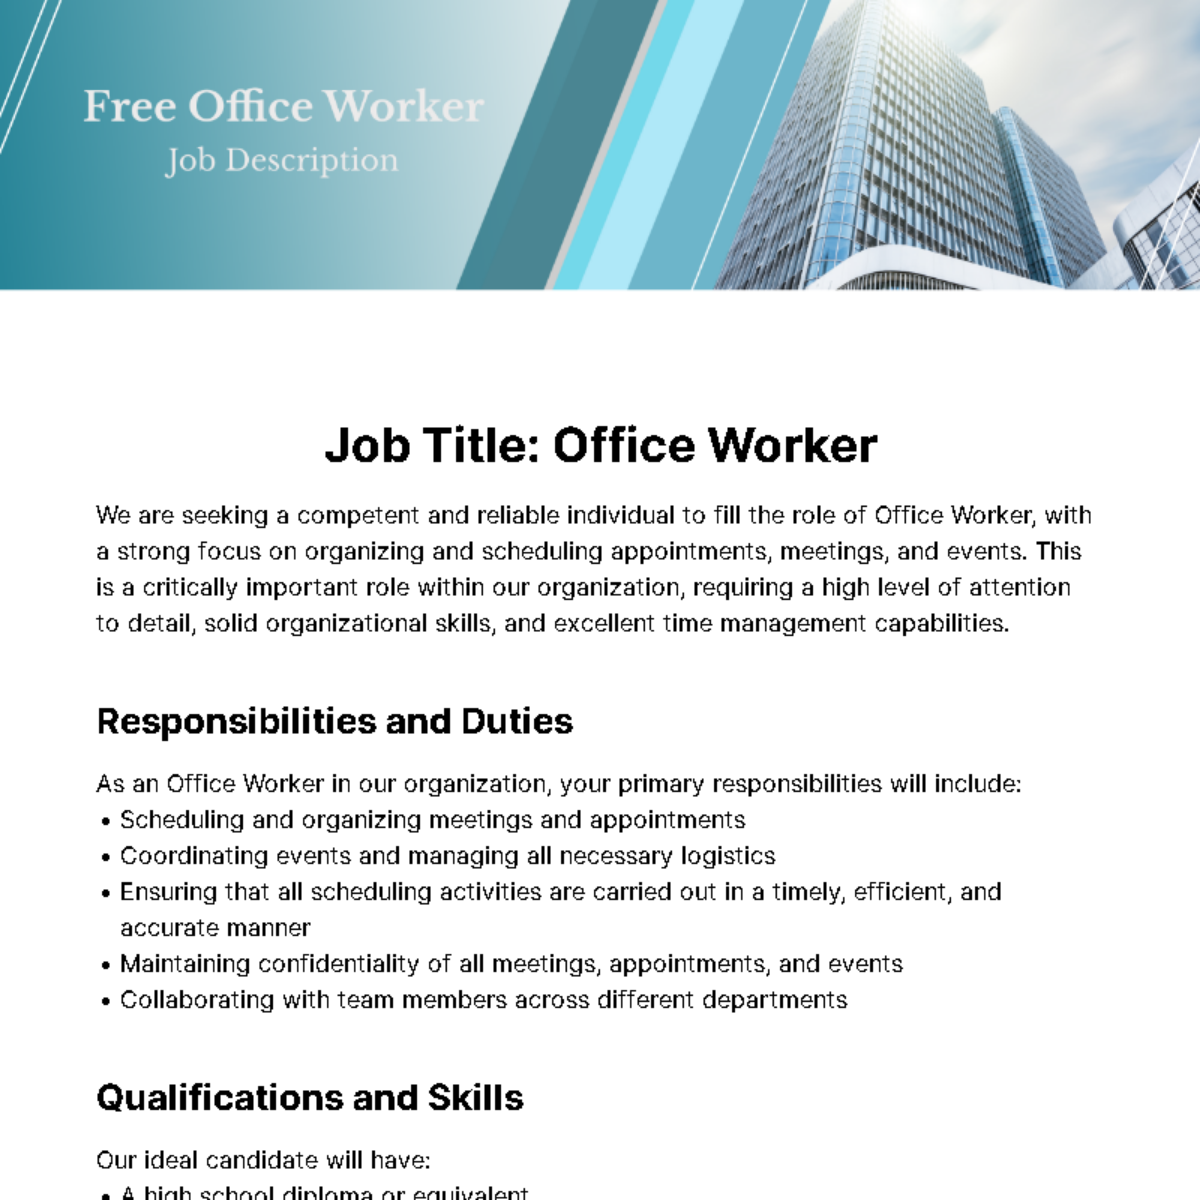 Free Office Worker Job Description Template